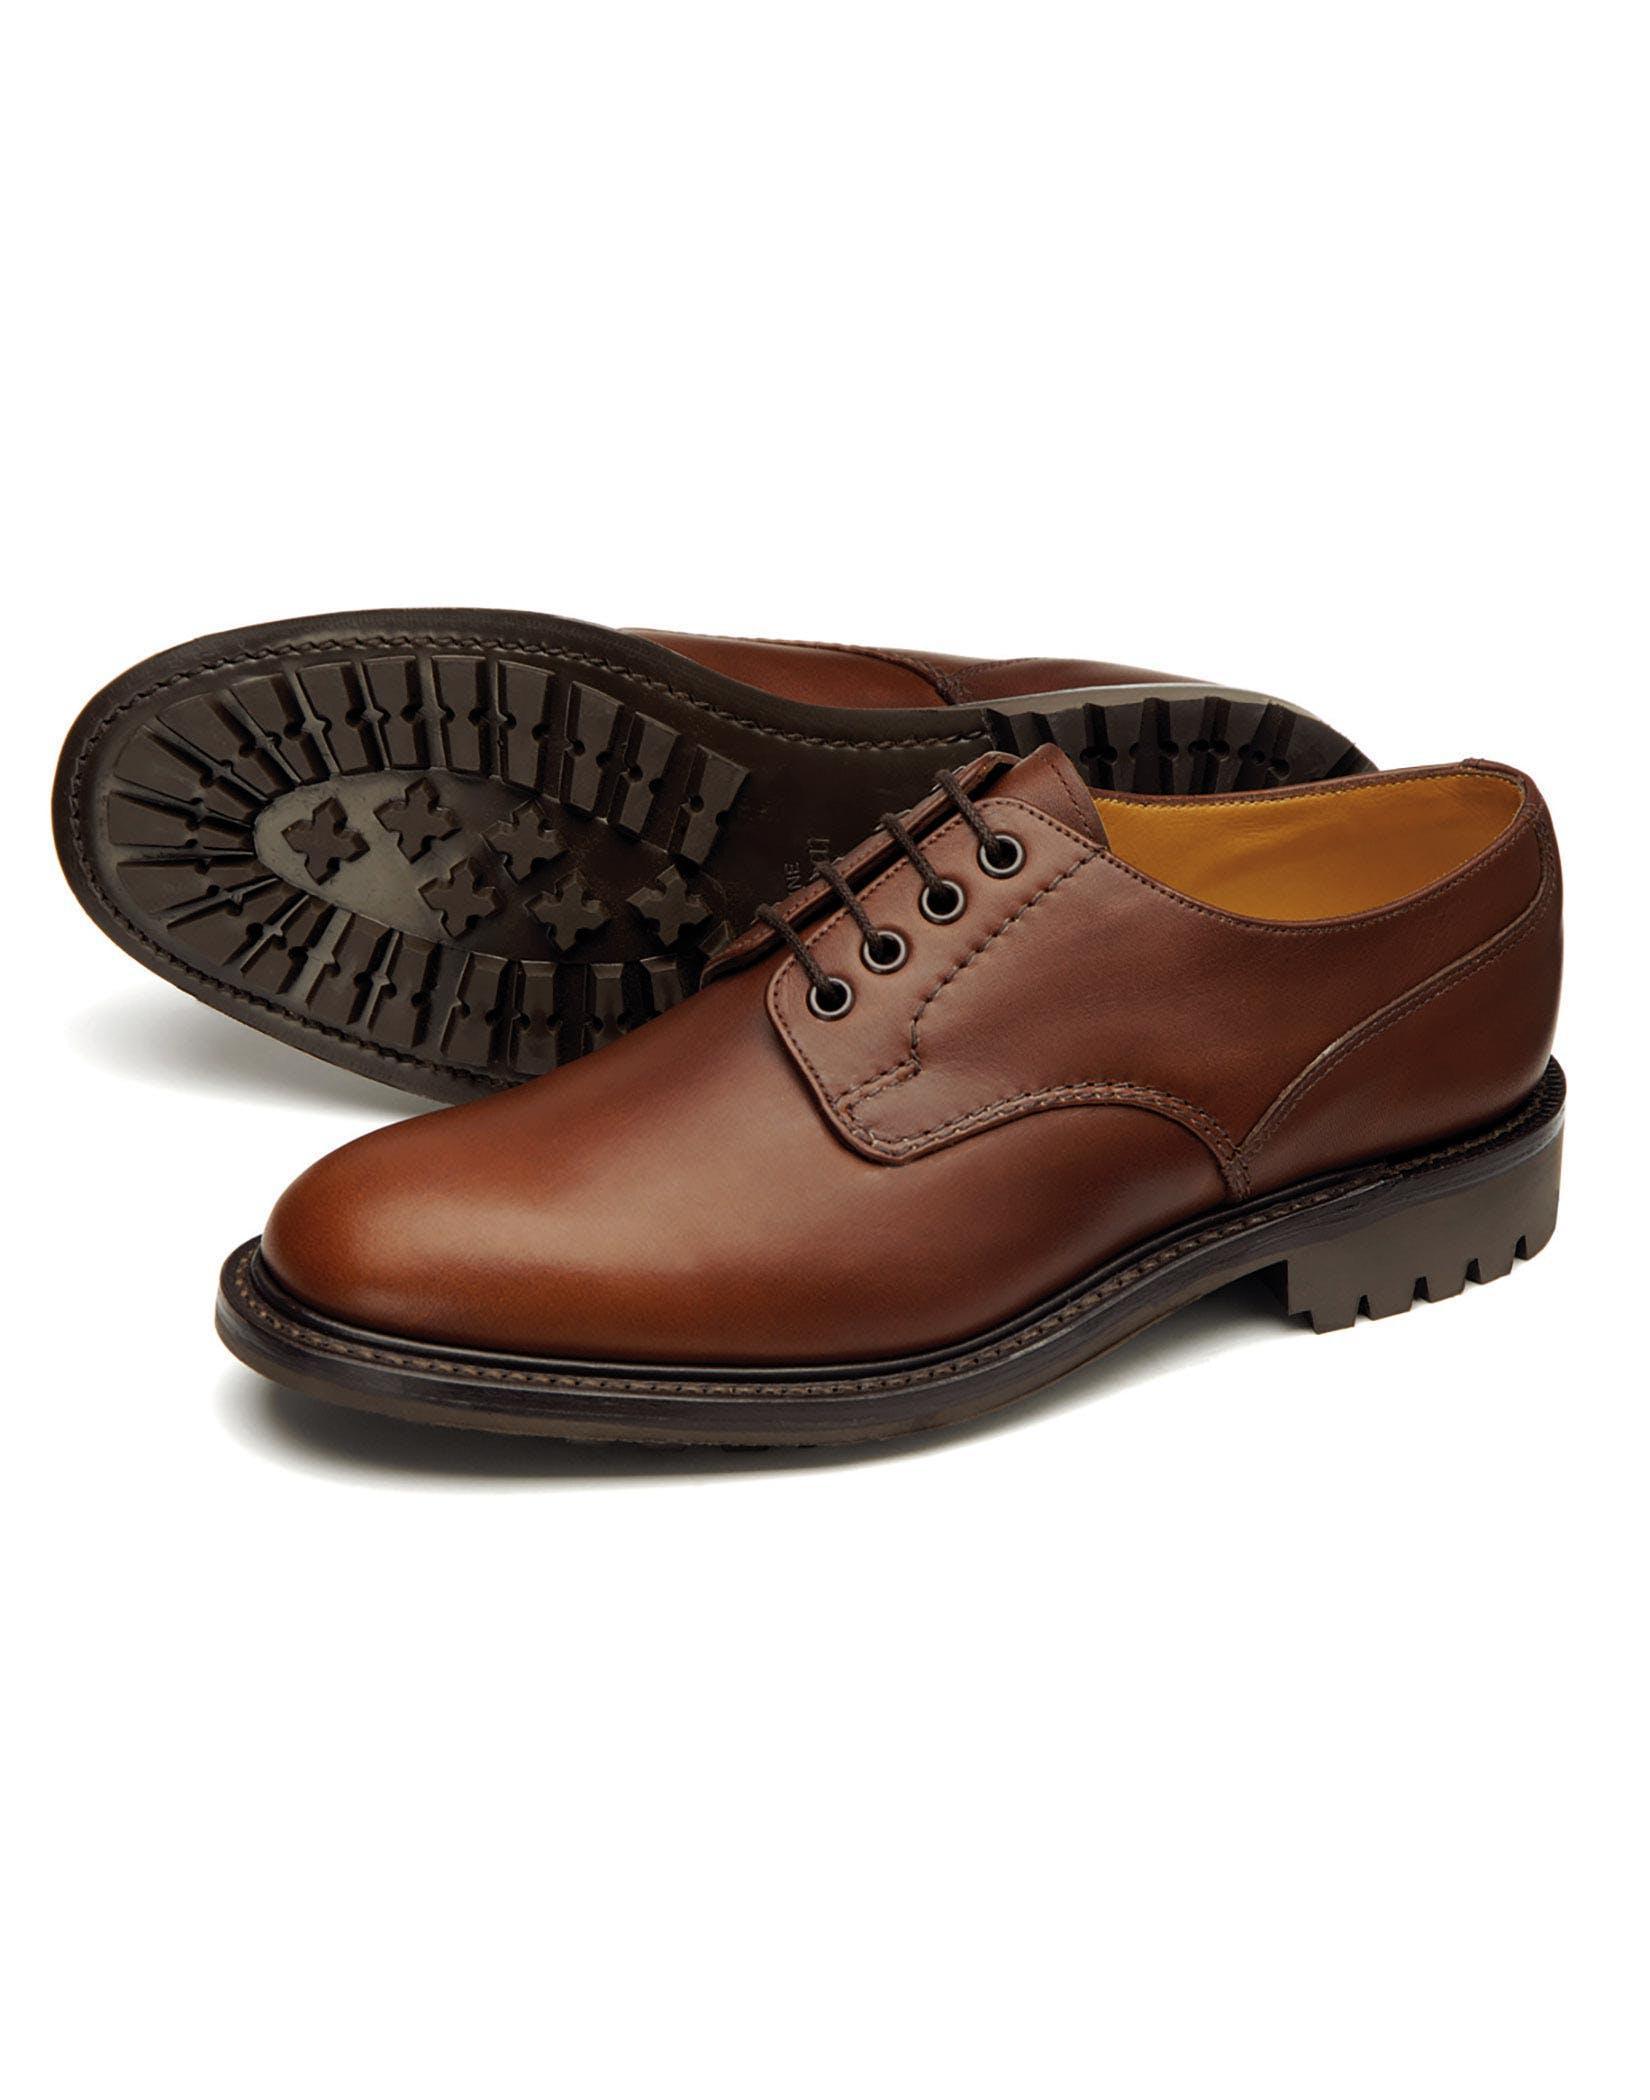 Brand New Loake Epsom Brown Waxy Shoe size Uk 8 & 11 Commando Soles 